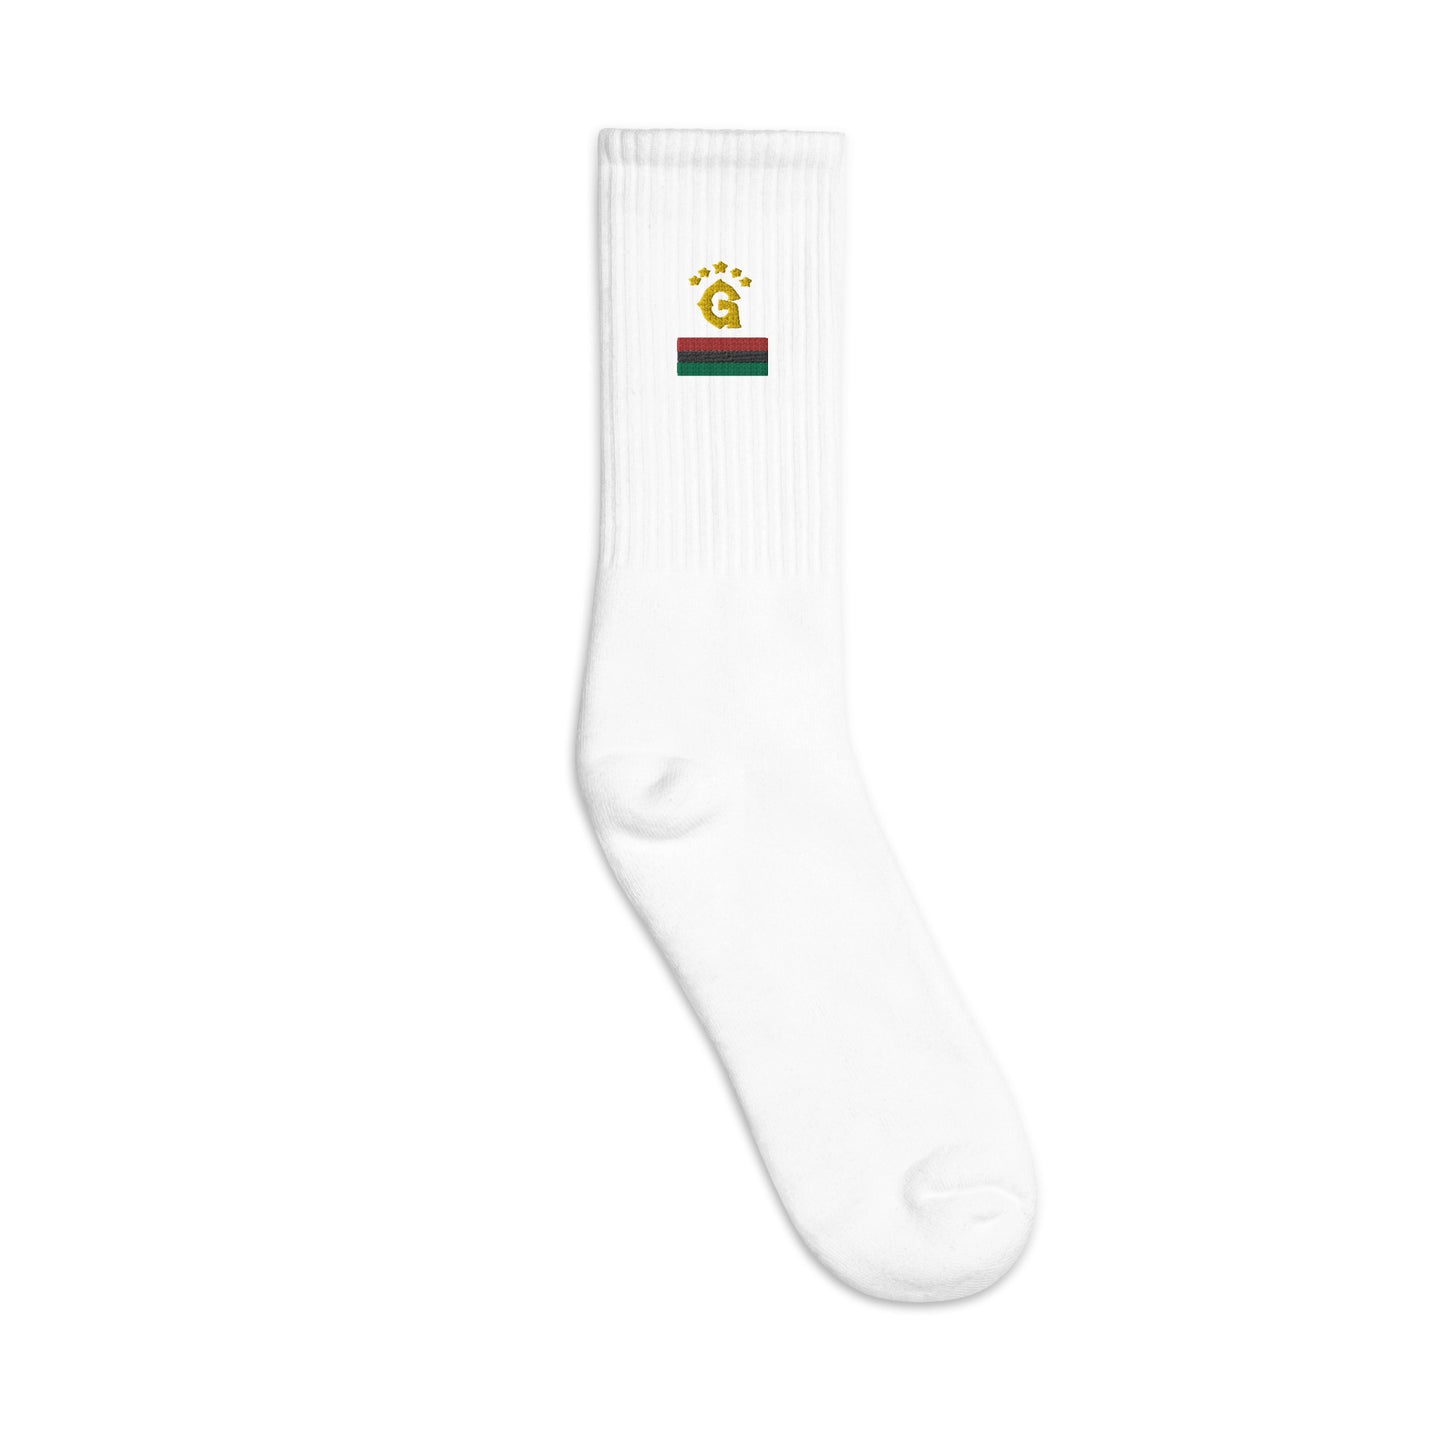 5ive Star G Embroidered socks